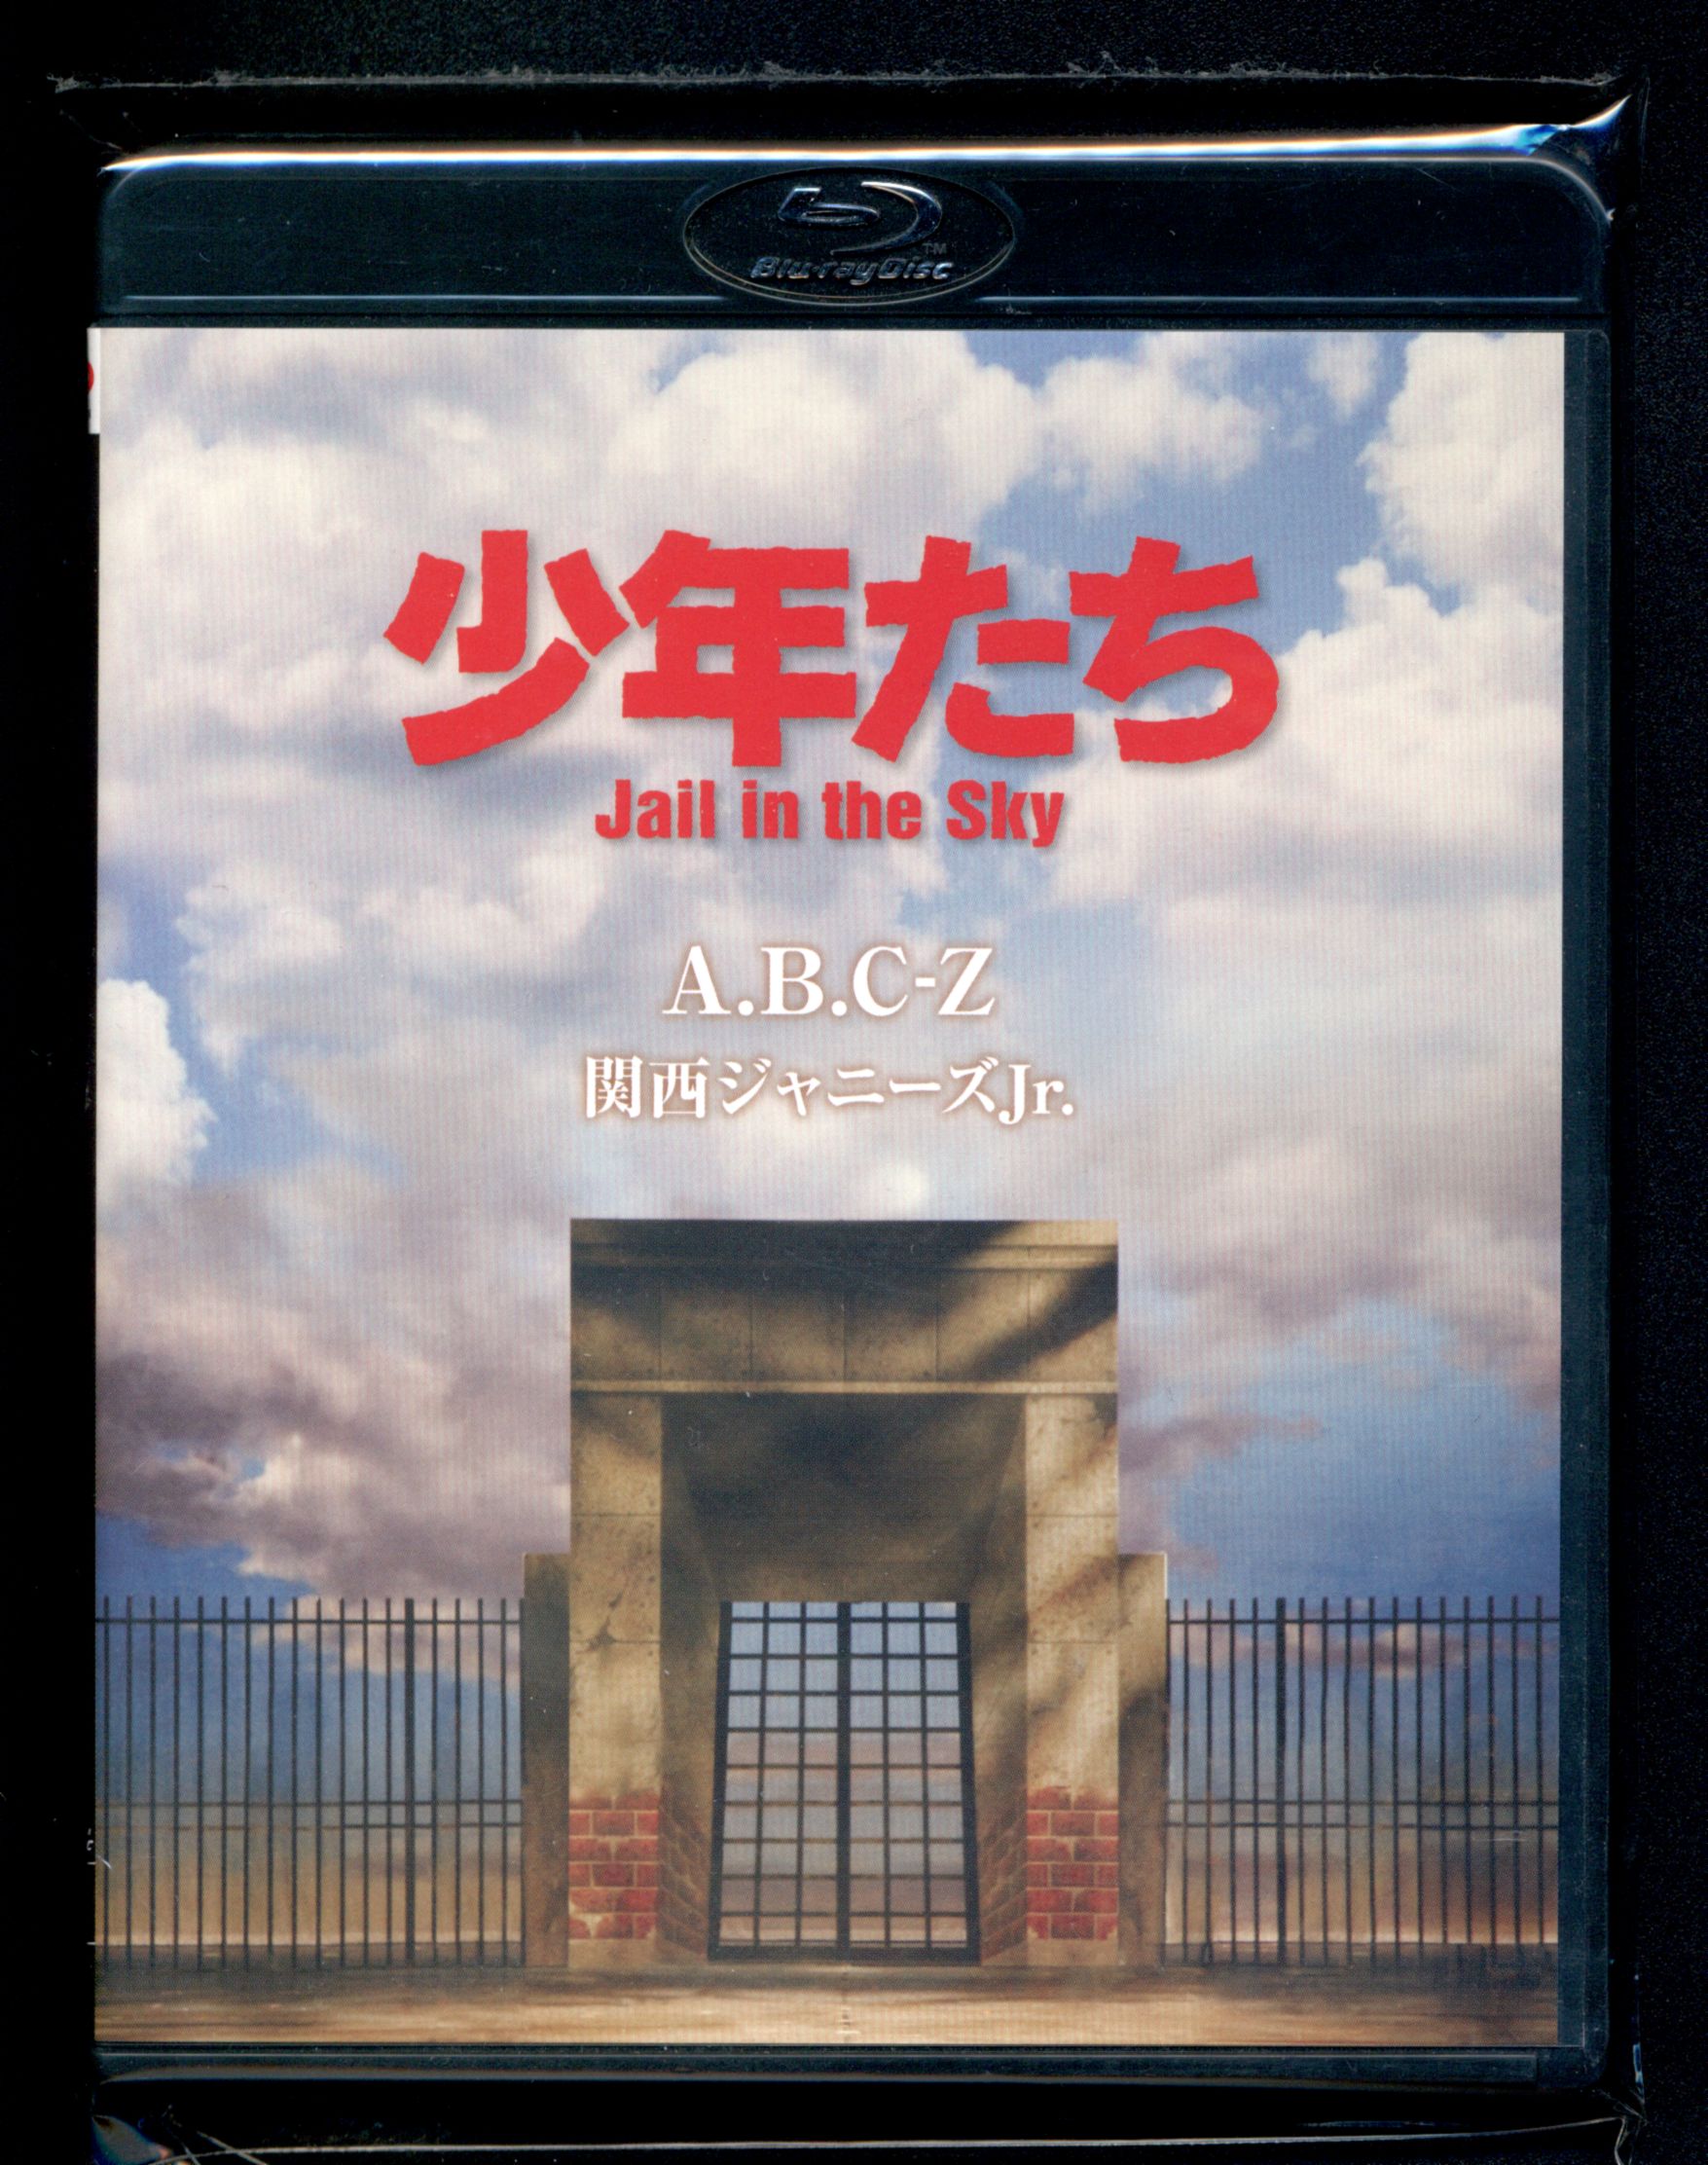 A.B.C-Z 少年たち Jail in the Sky - お笑い・バラエティ